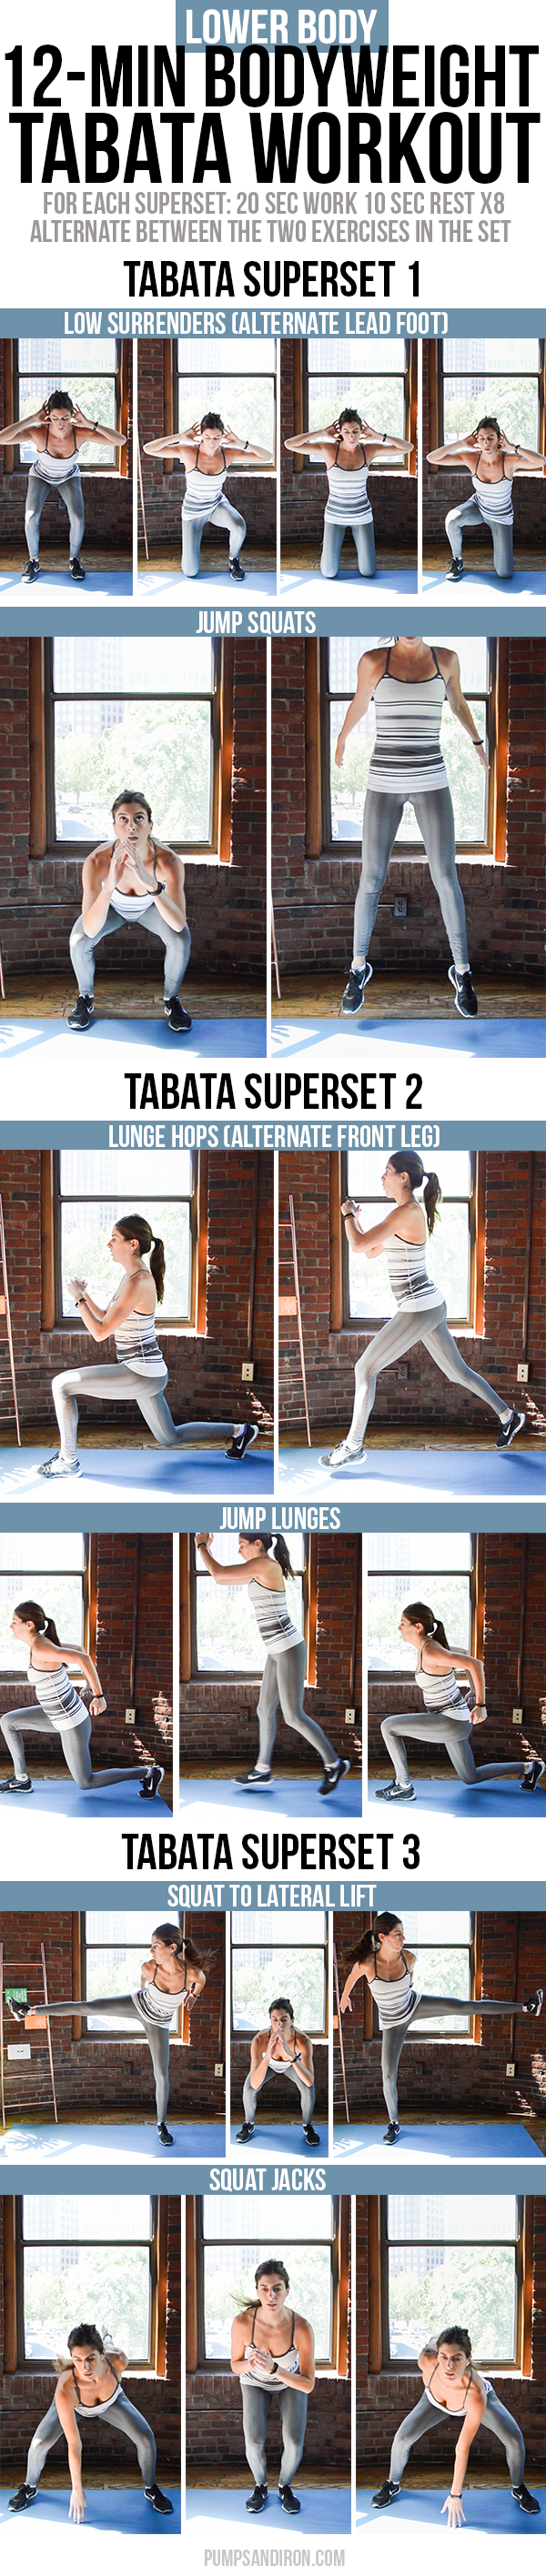 TAKE-CHARGE Tabata HIIT Workout - Bodyweight